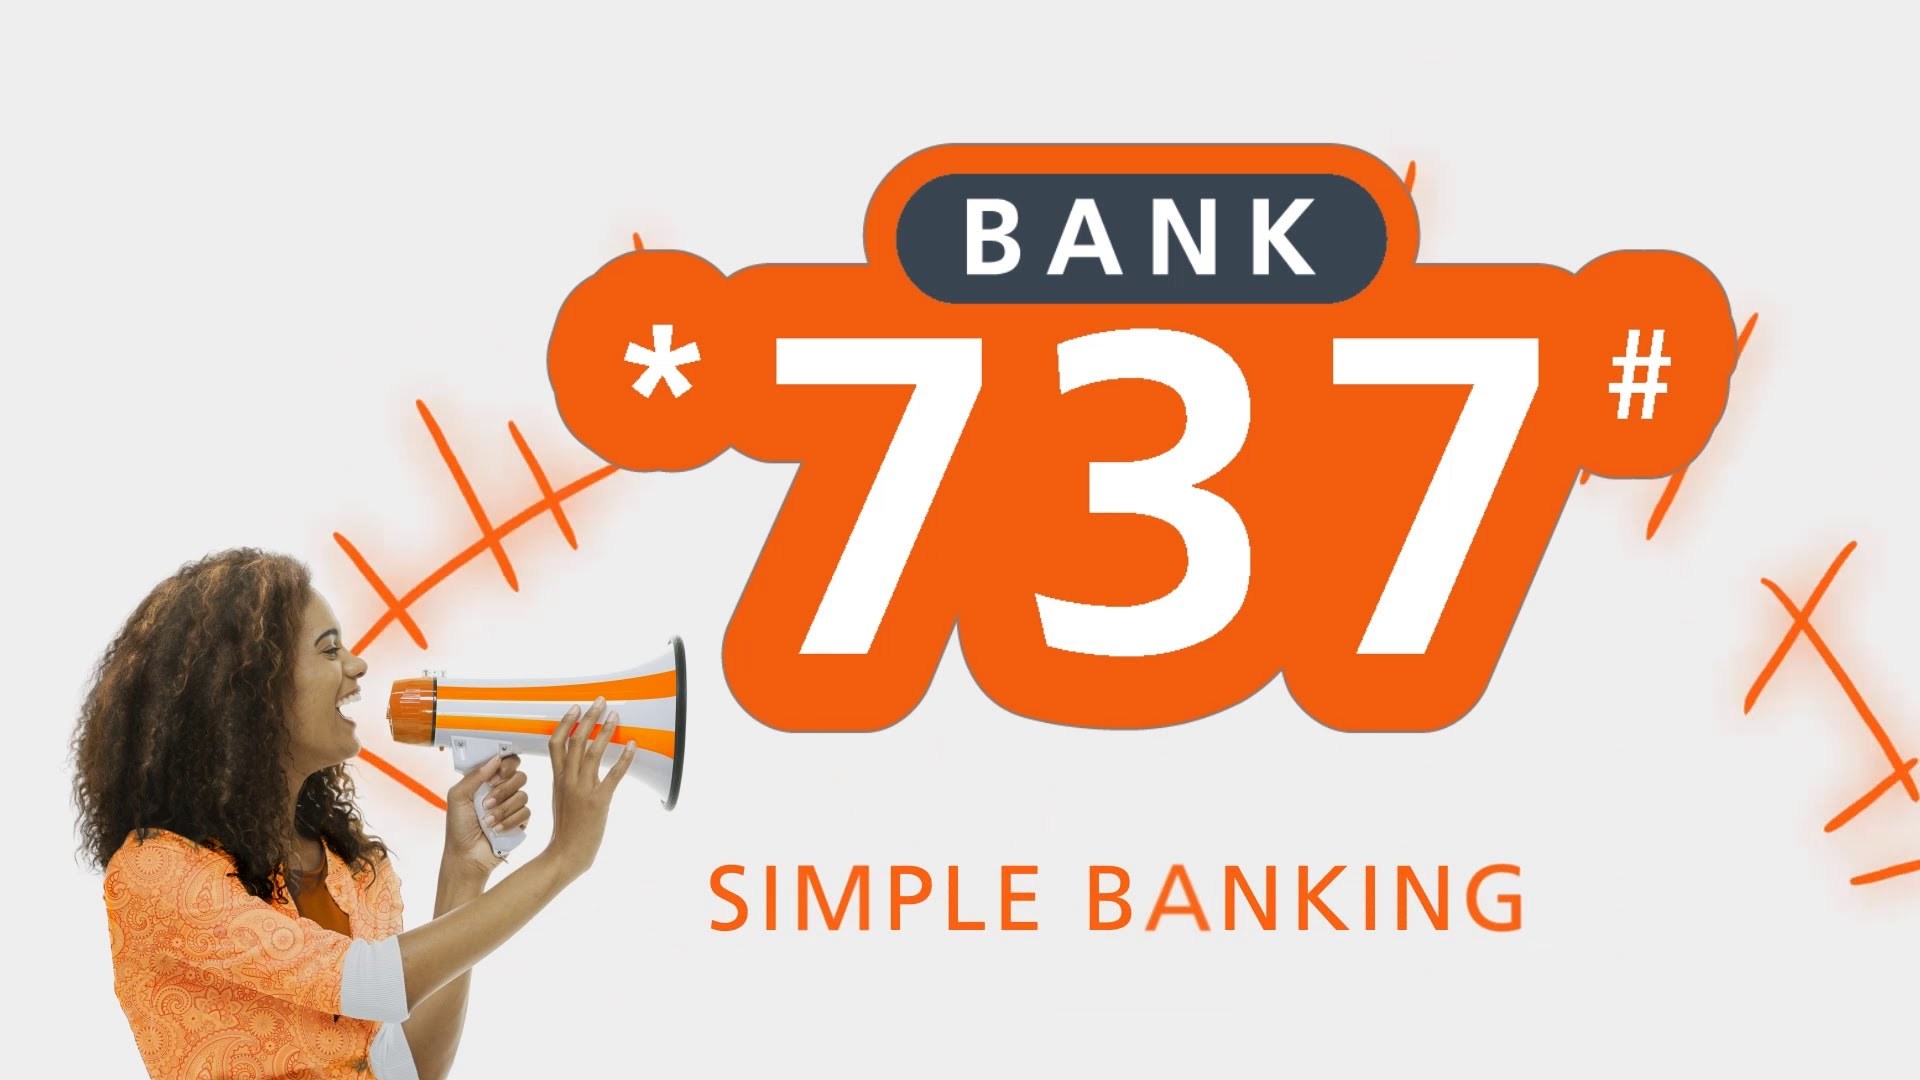 GTBank *737# Simple banking